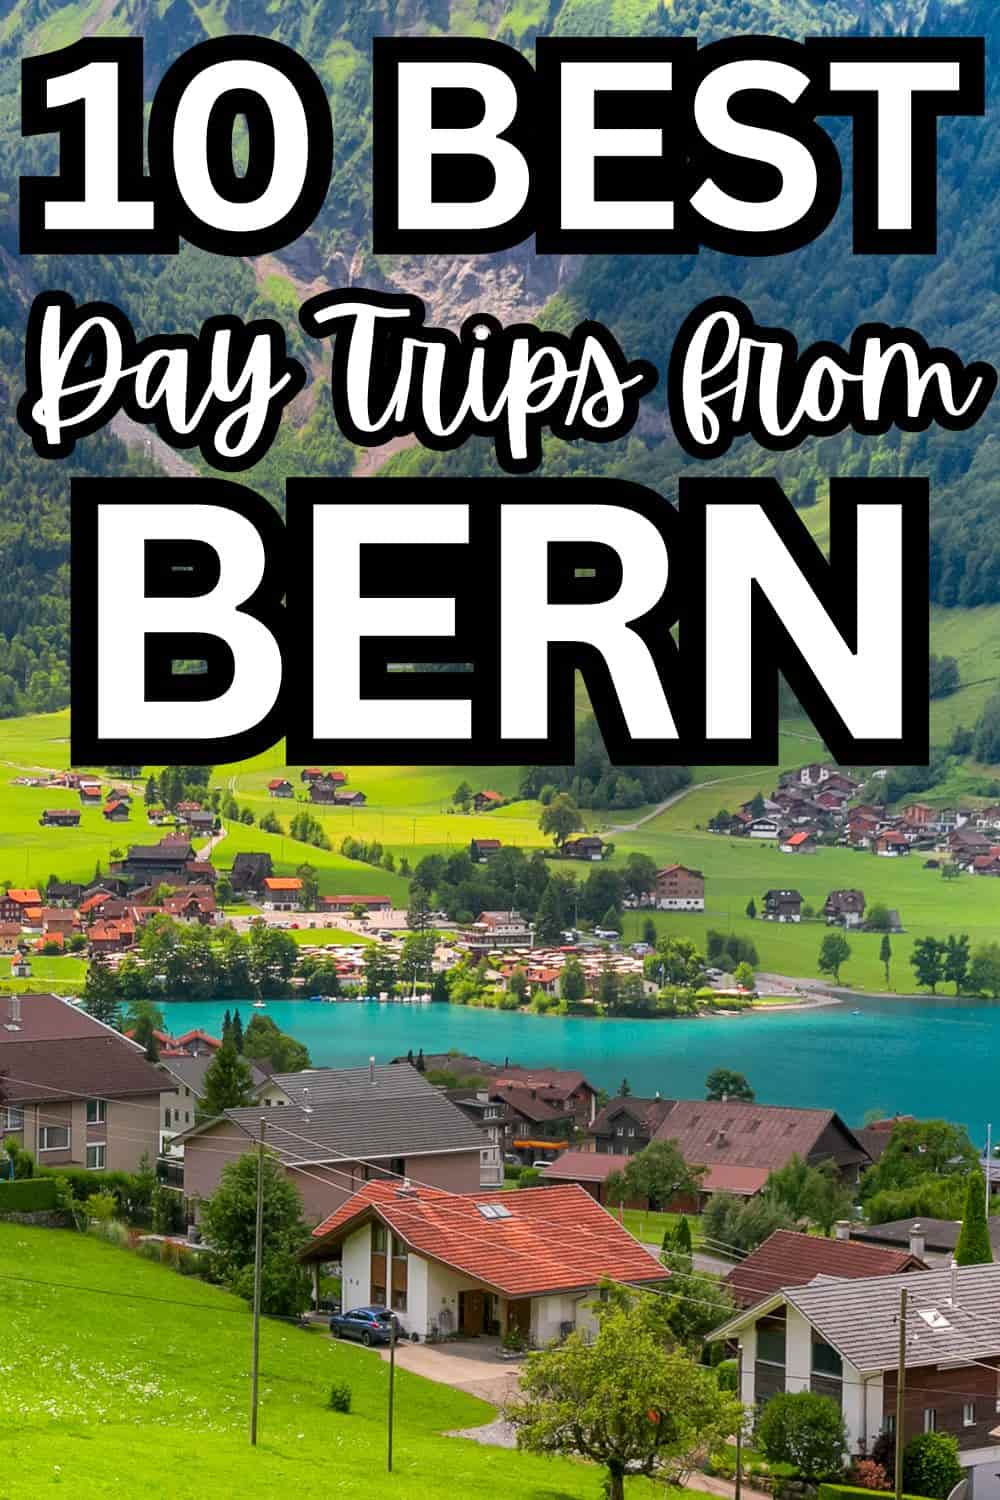 10 Best Day Trips From Bern, Switzerland